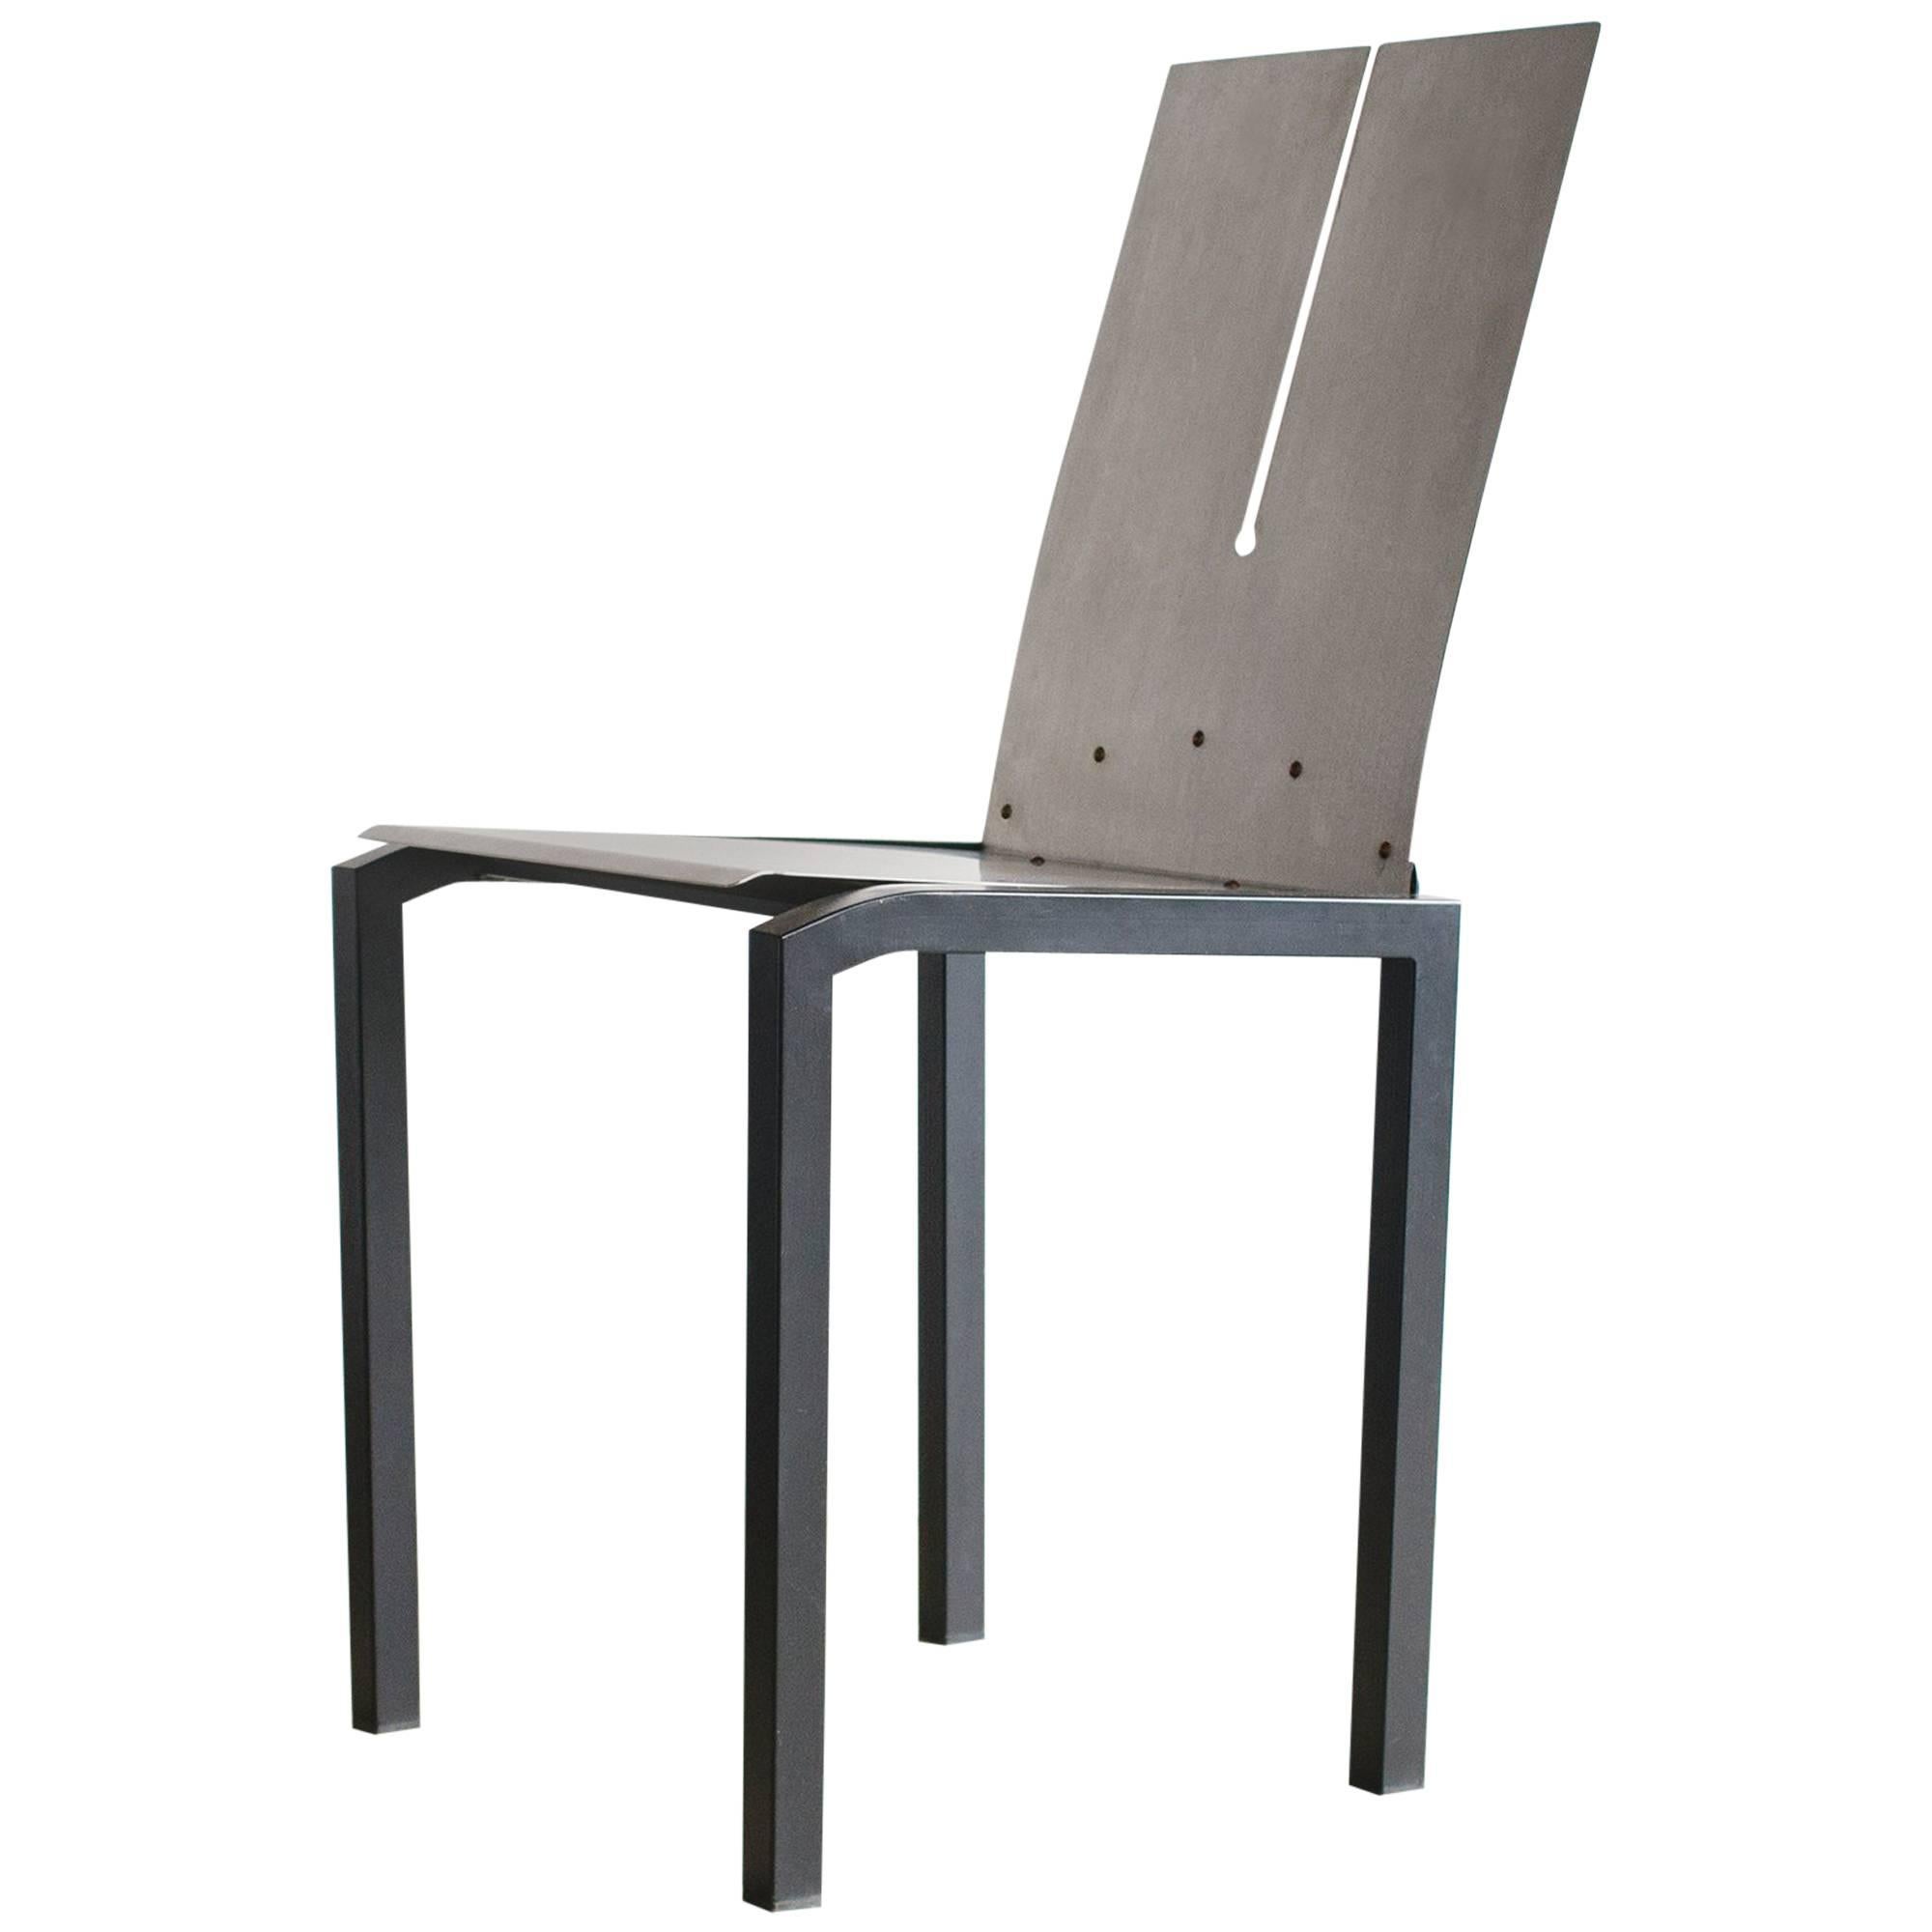 Maurizio Peregalli "Blade" Chair for Zeus Noto